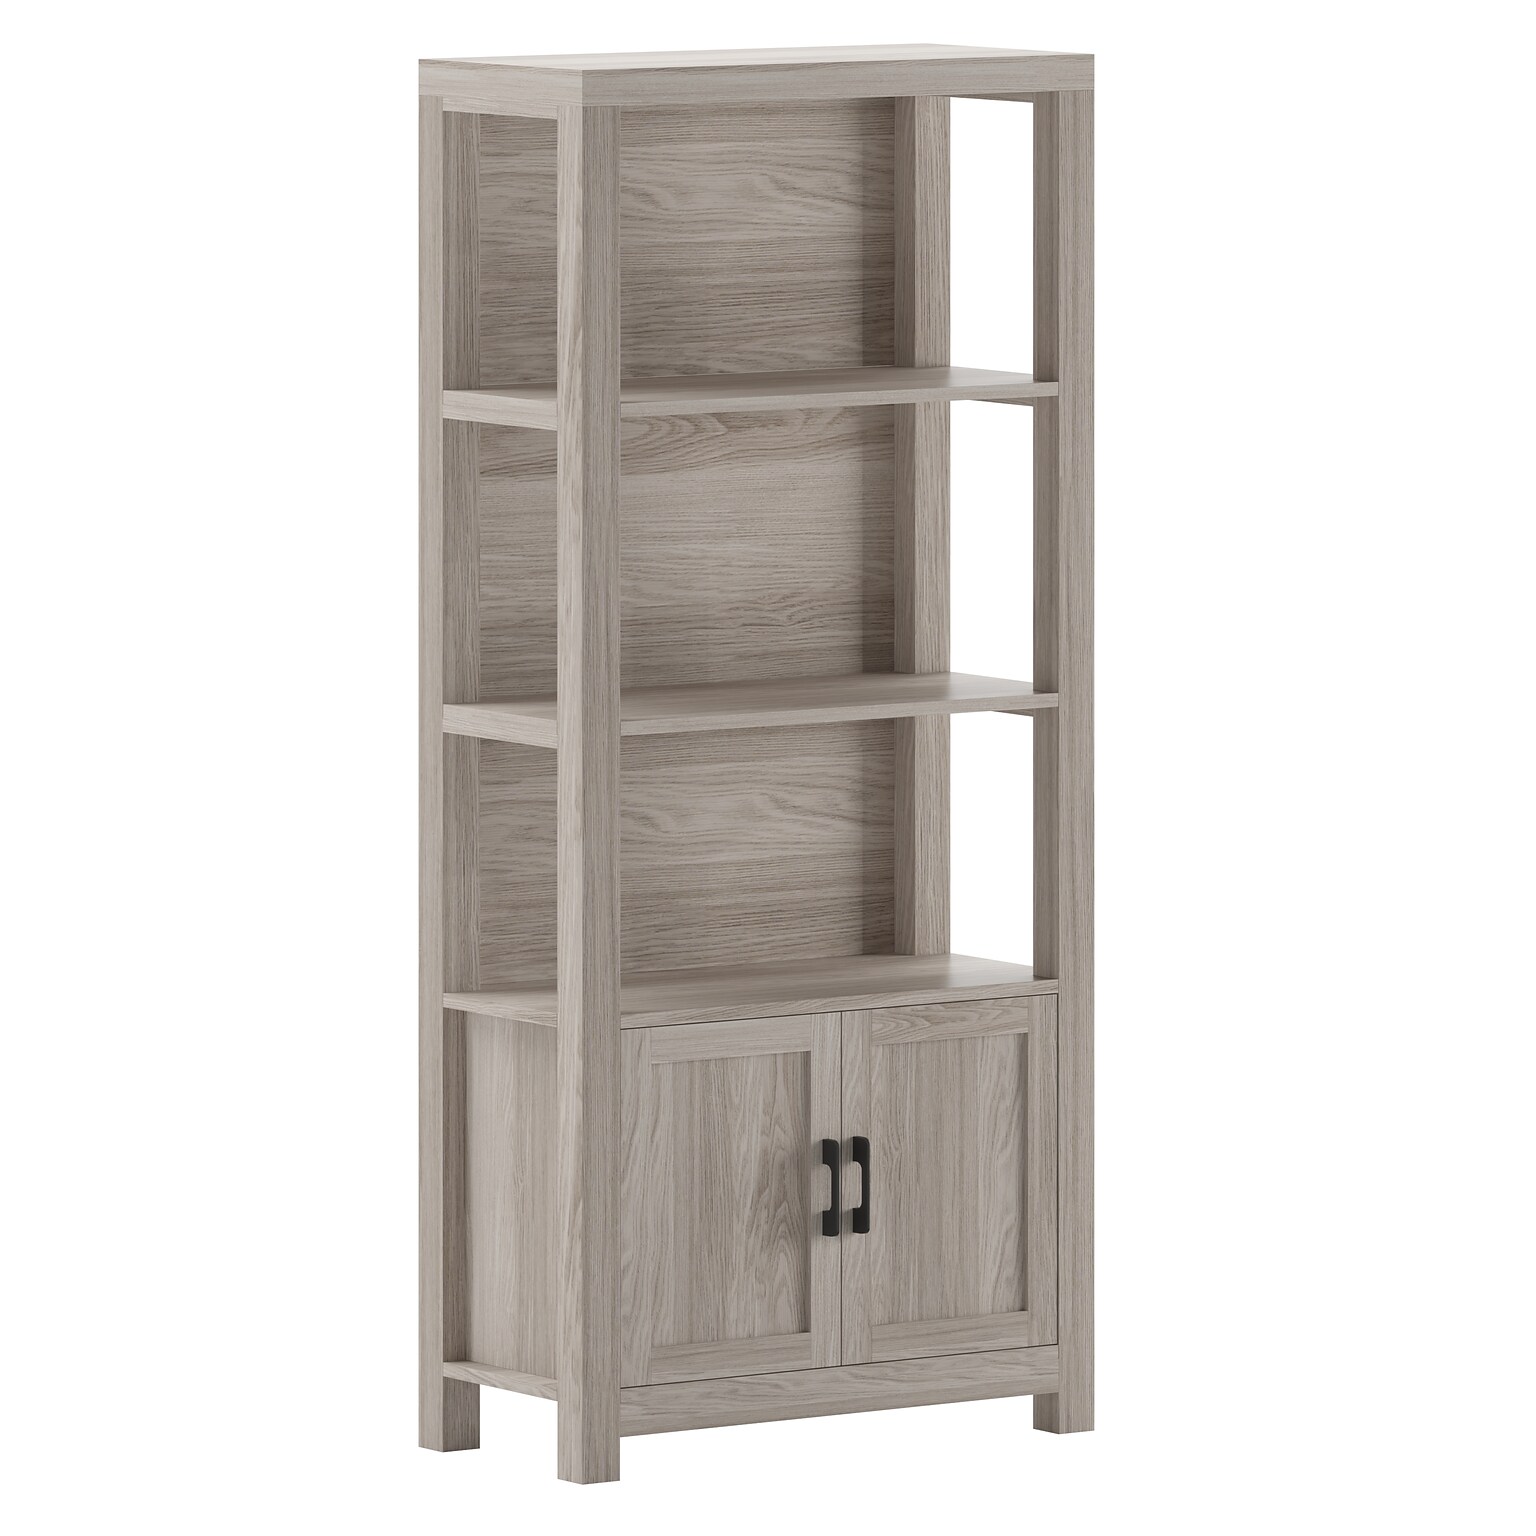 Martha Stewart Hutton 68 4-Shelf Shaker Style Bookcase w/ Cabinet, Gray Washed Wood/Oil Rubbed Bronze Hardware (ZG053GYBK)